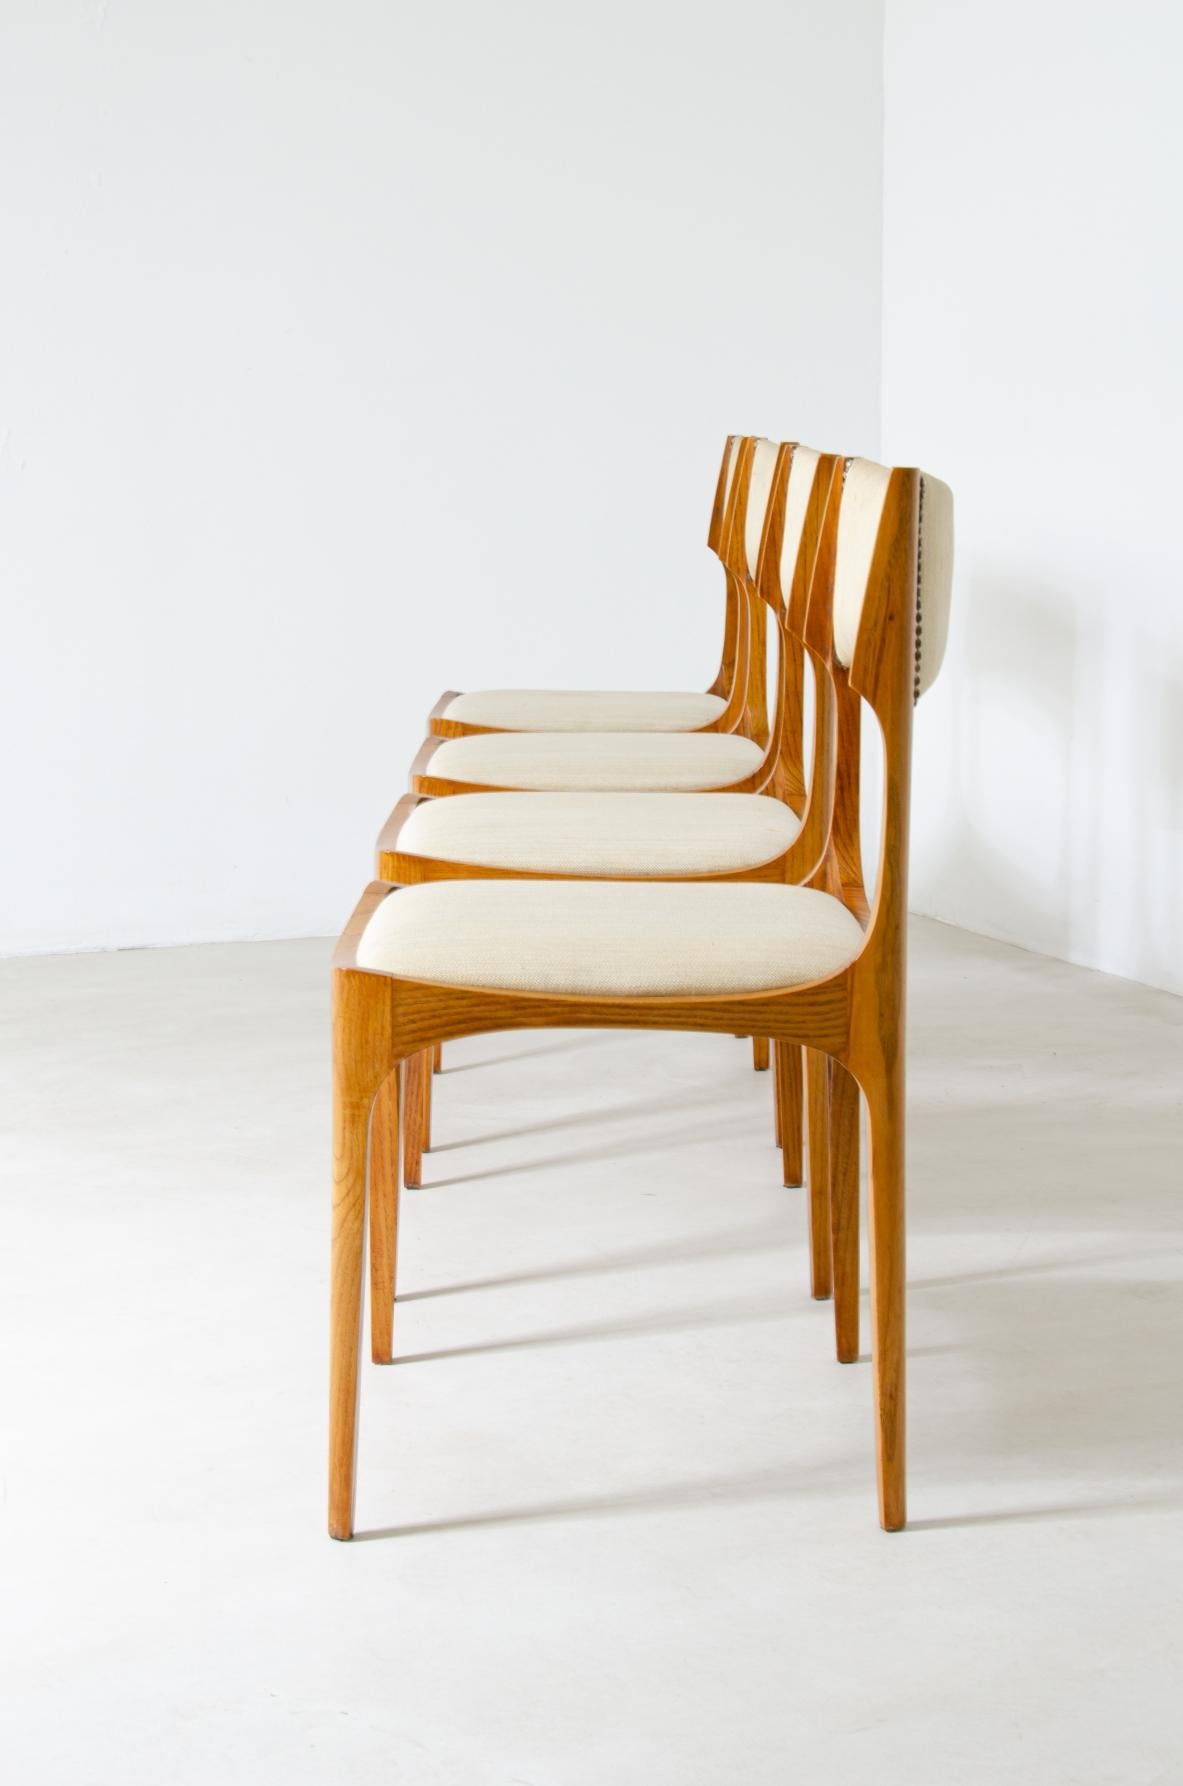 European Giuseppe Gibelli's set of 10 chairs